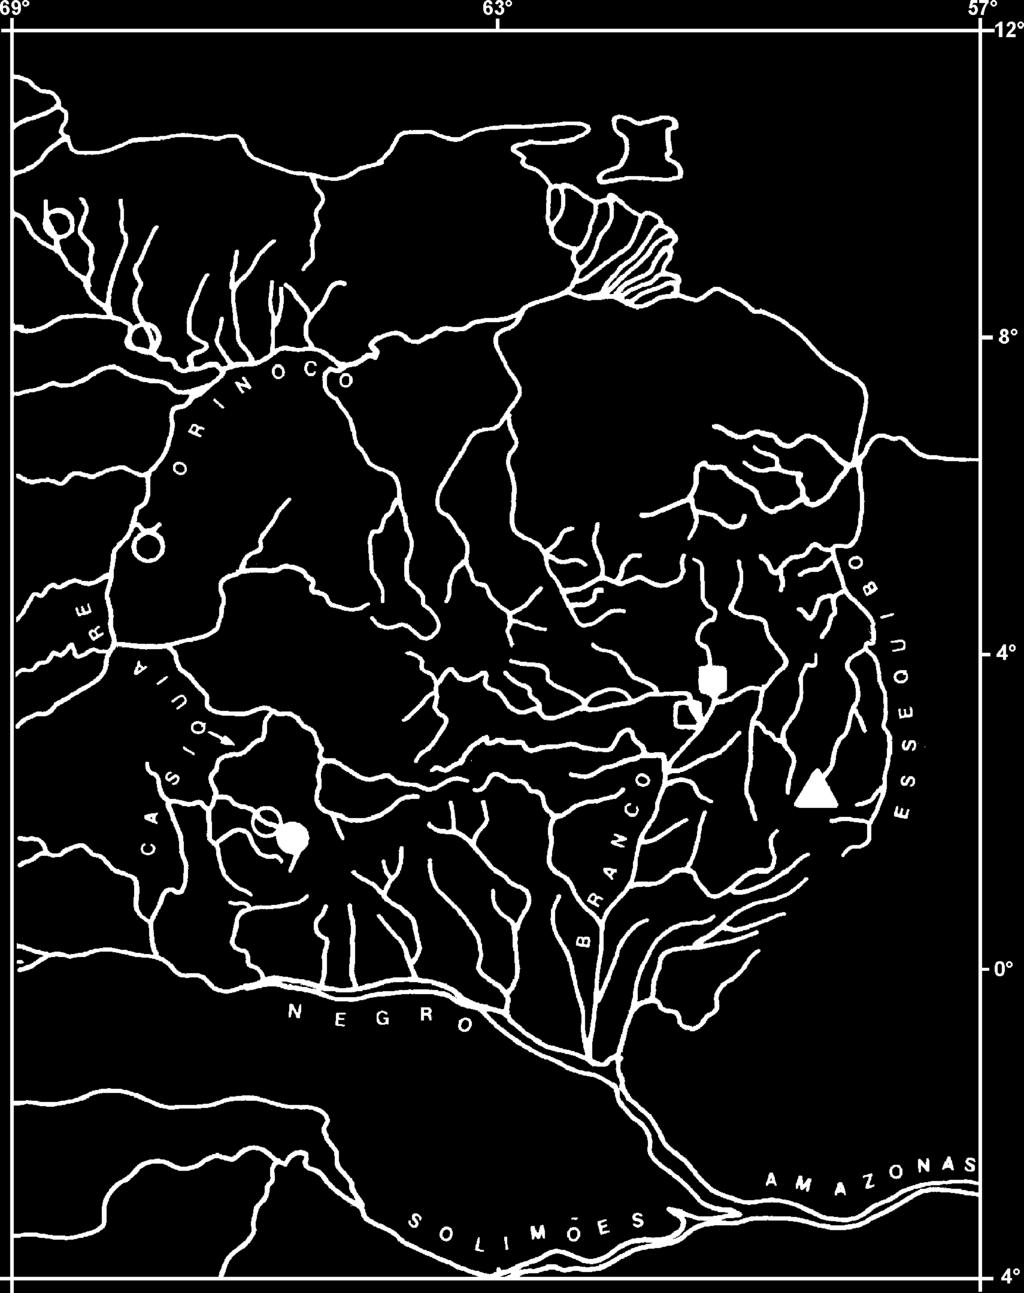 PAP. AVULS ZOOL. 43(1), 2003 3 Astyanax clavitaeniatus sp. n. Figuras 1 e 2, Tabelas 1 e 3 Holótipo: MZUSP 5146, 48,3 mm CP. Surumu, rio Surumu (aprox. 03 30 N-60 25 W), Roraima, Brasil, x.1966, col.